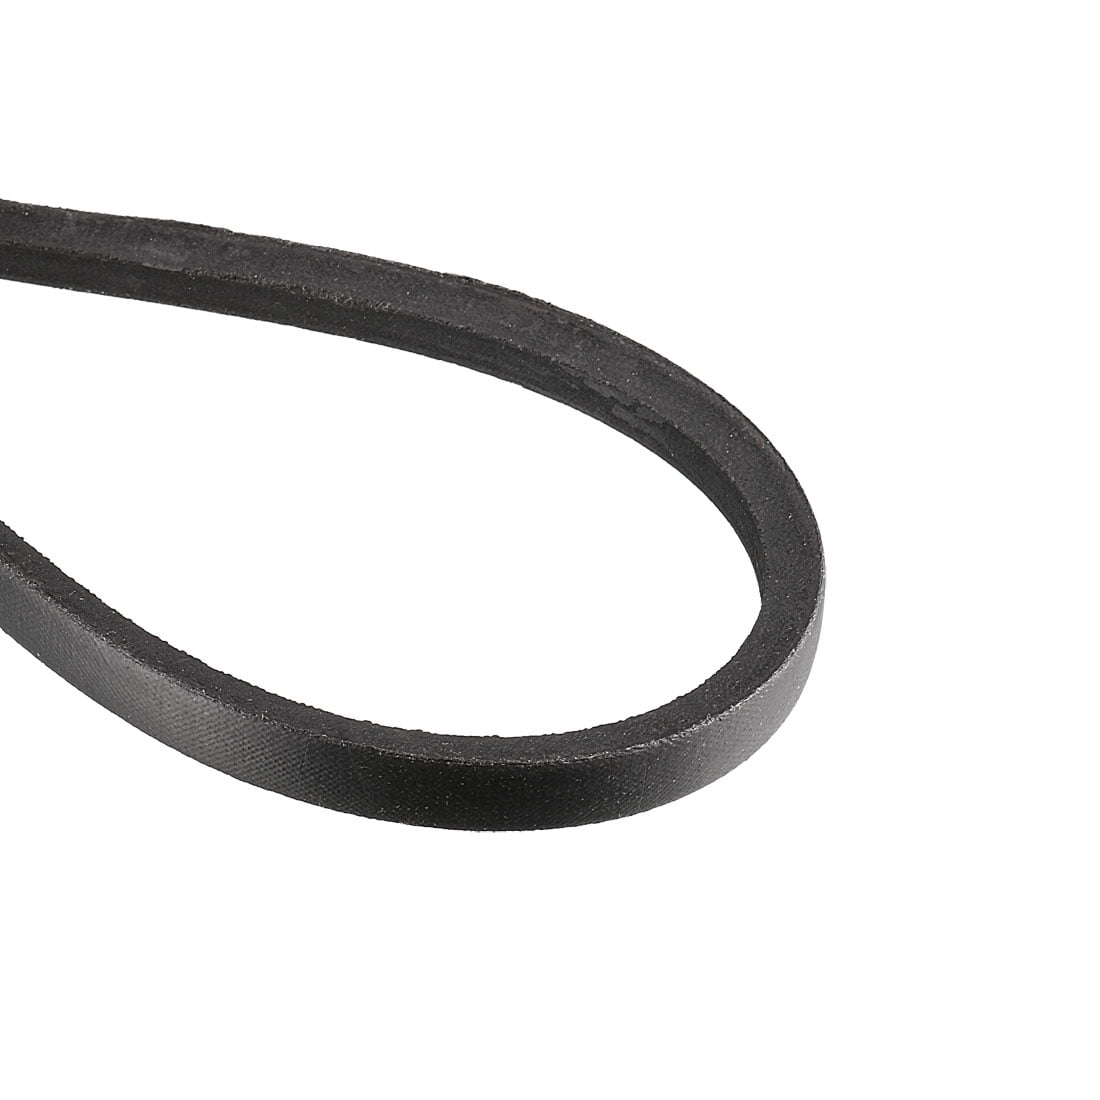 uxcell O-500 V Belt Machine Transmission Rubber,Black Replacement Drive Belt 